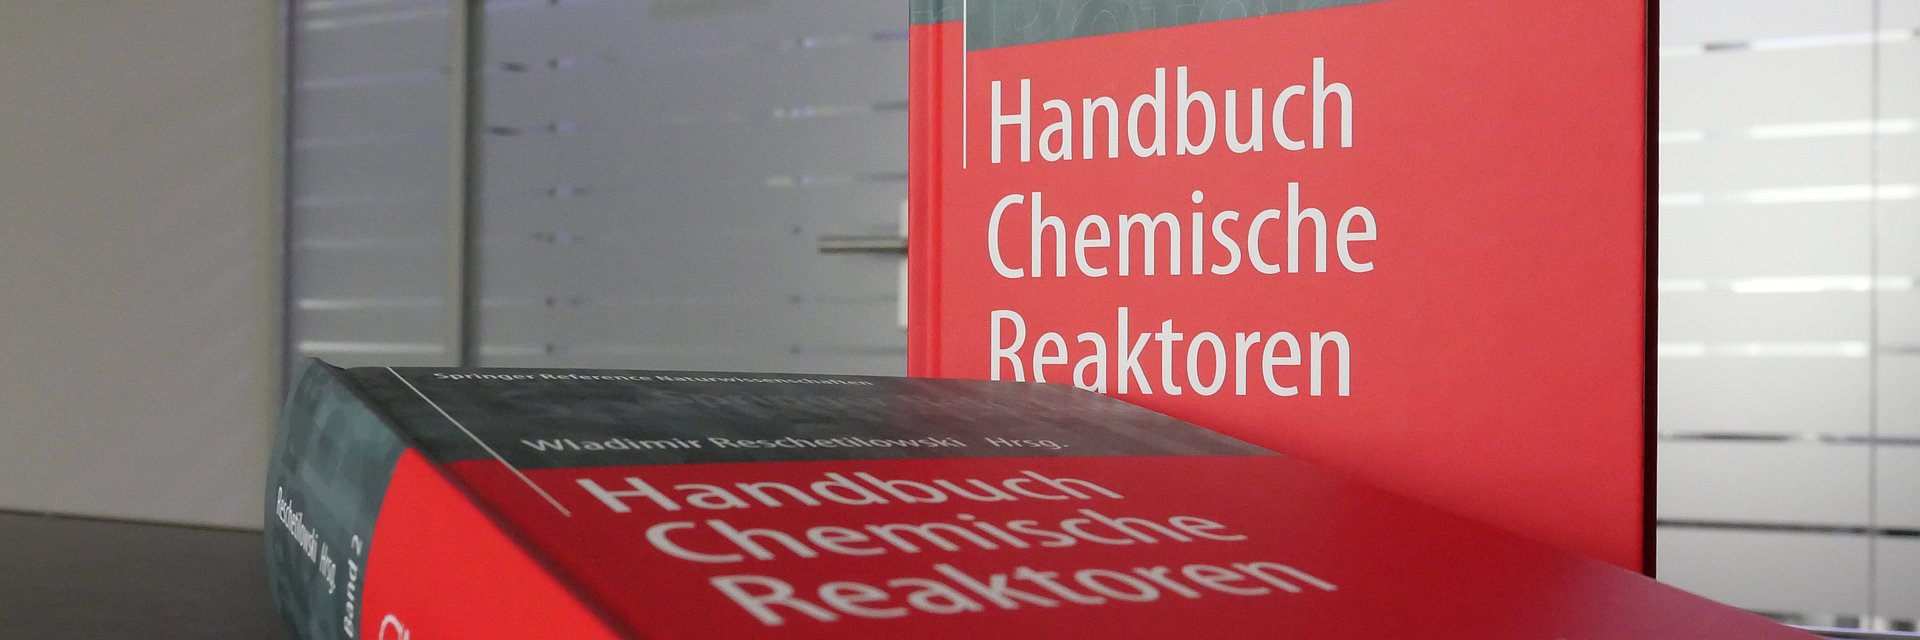 Wladimir Reschetilowski's Handbook of Chemical Reactors